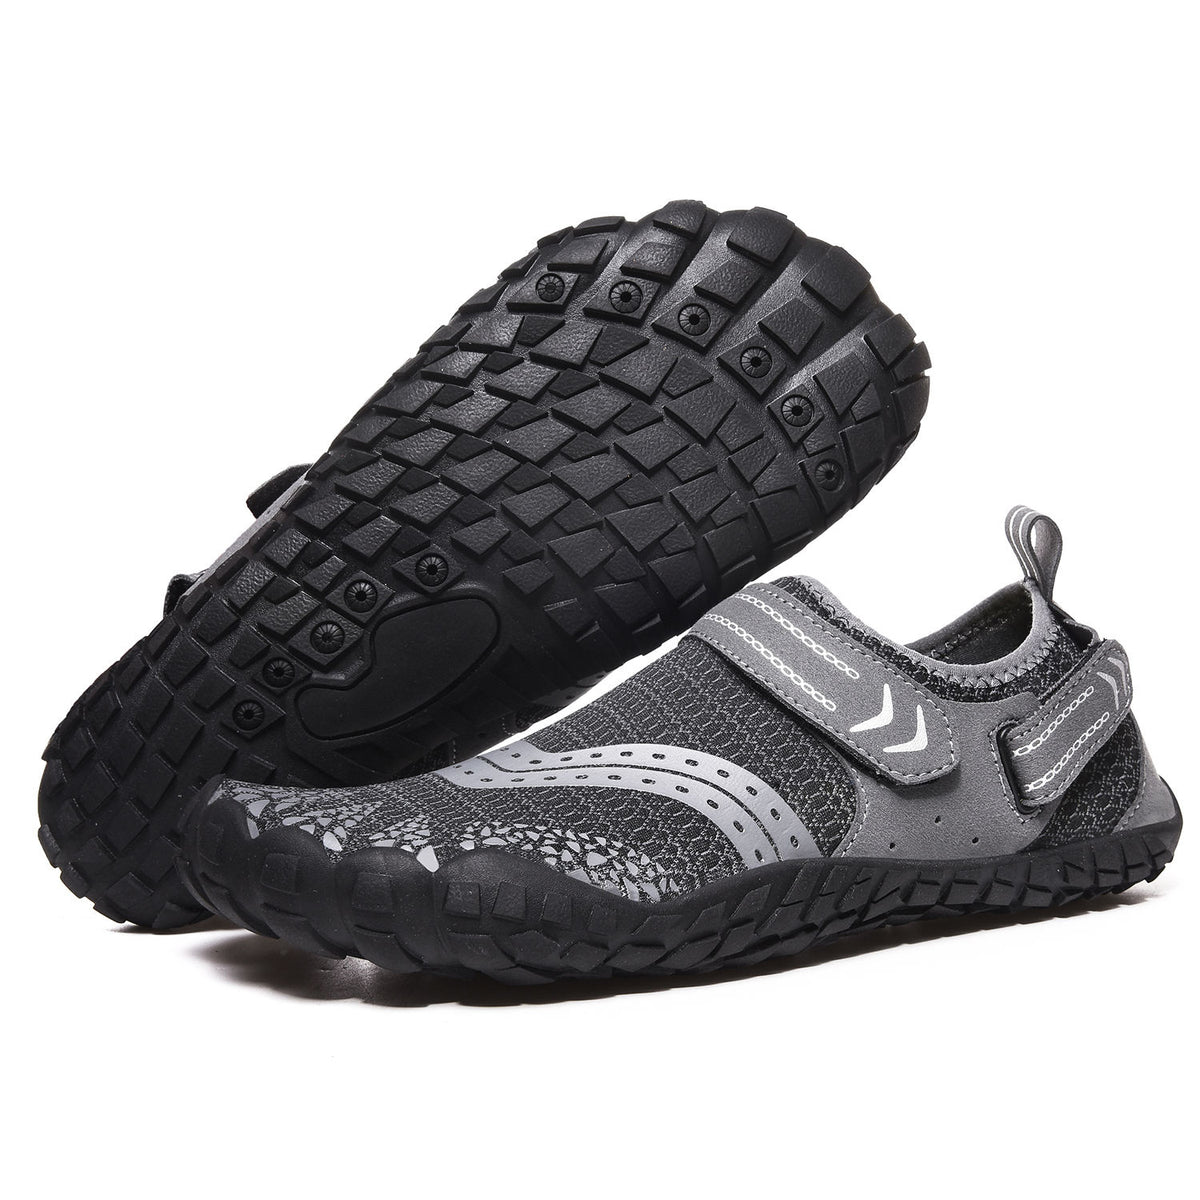 ANDUNE Men’s Barefoot & Minimalist Cross Training Shoes – Ultra Light Grey Bolts